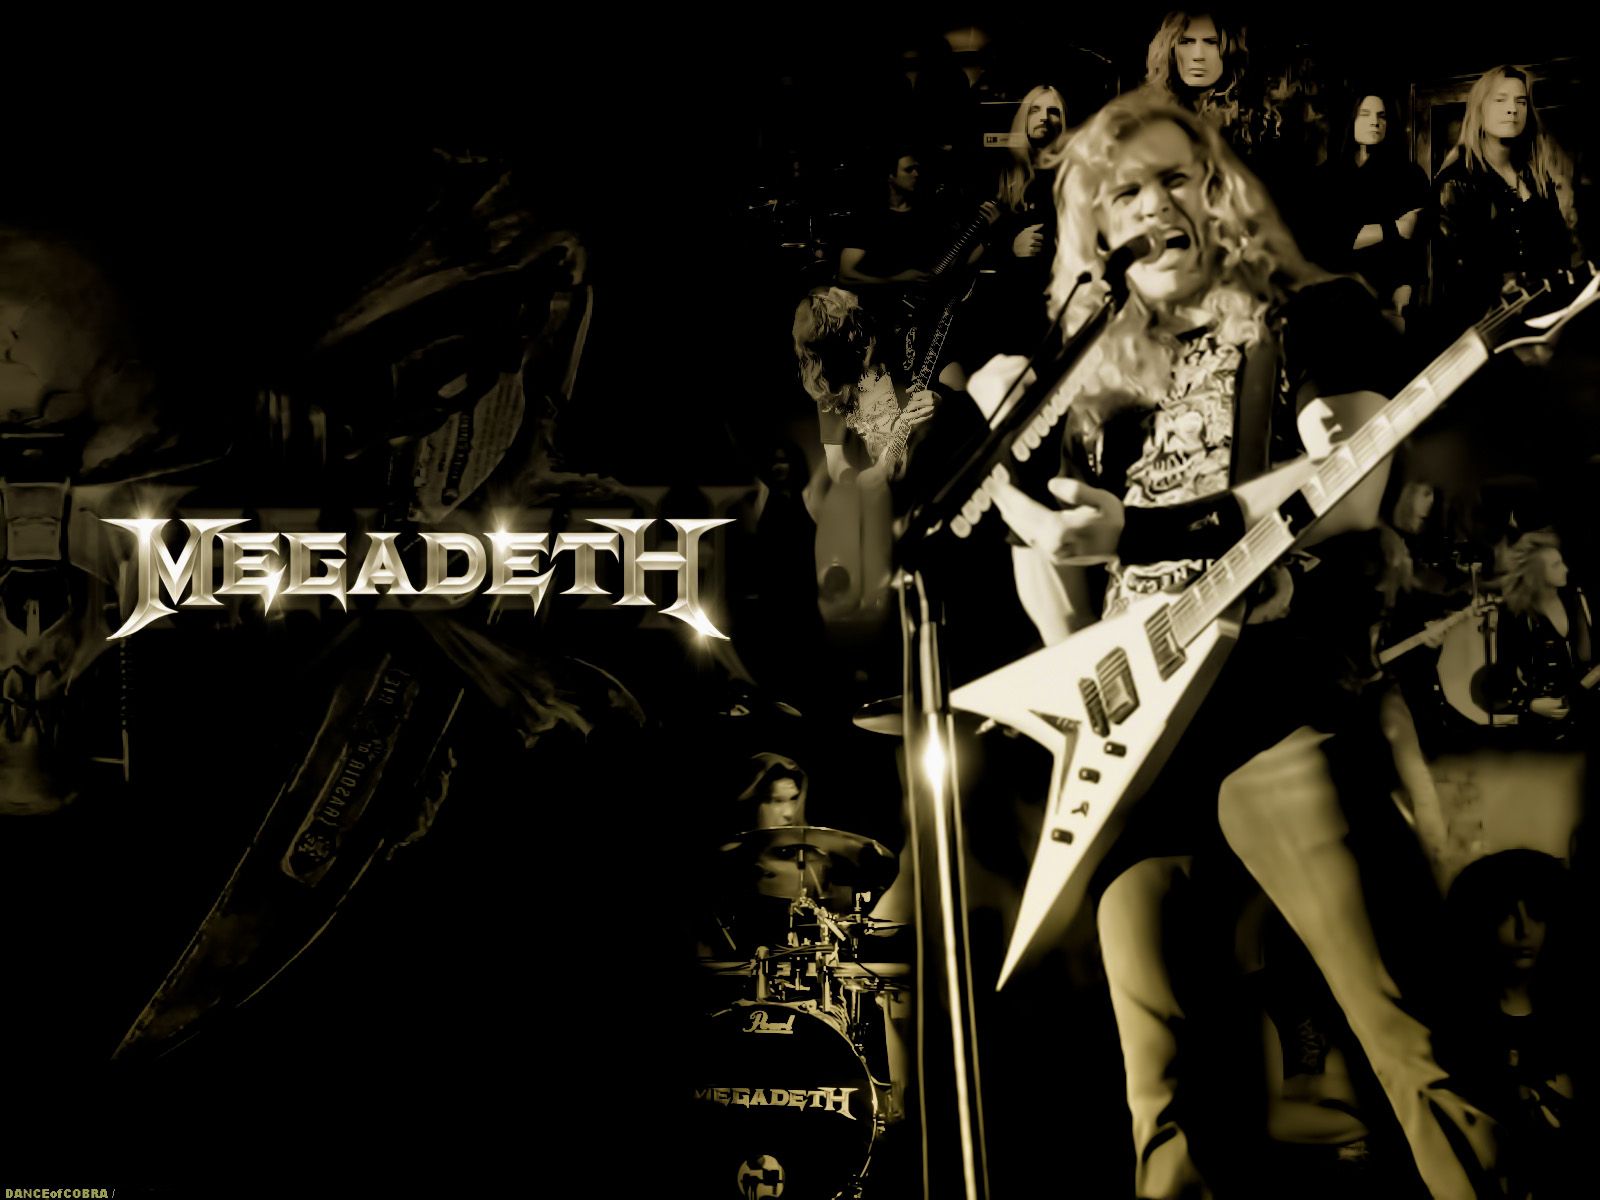 Ultra HD Megadeth Wallpaper Asq9hzh 4usky